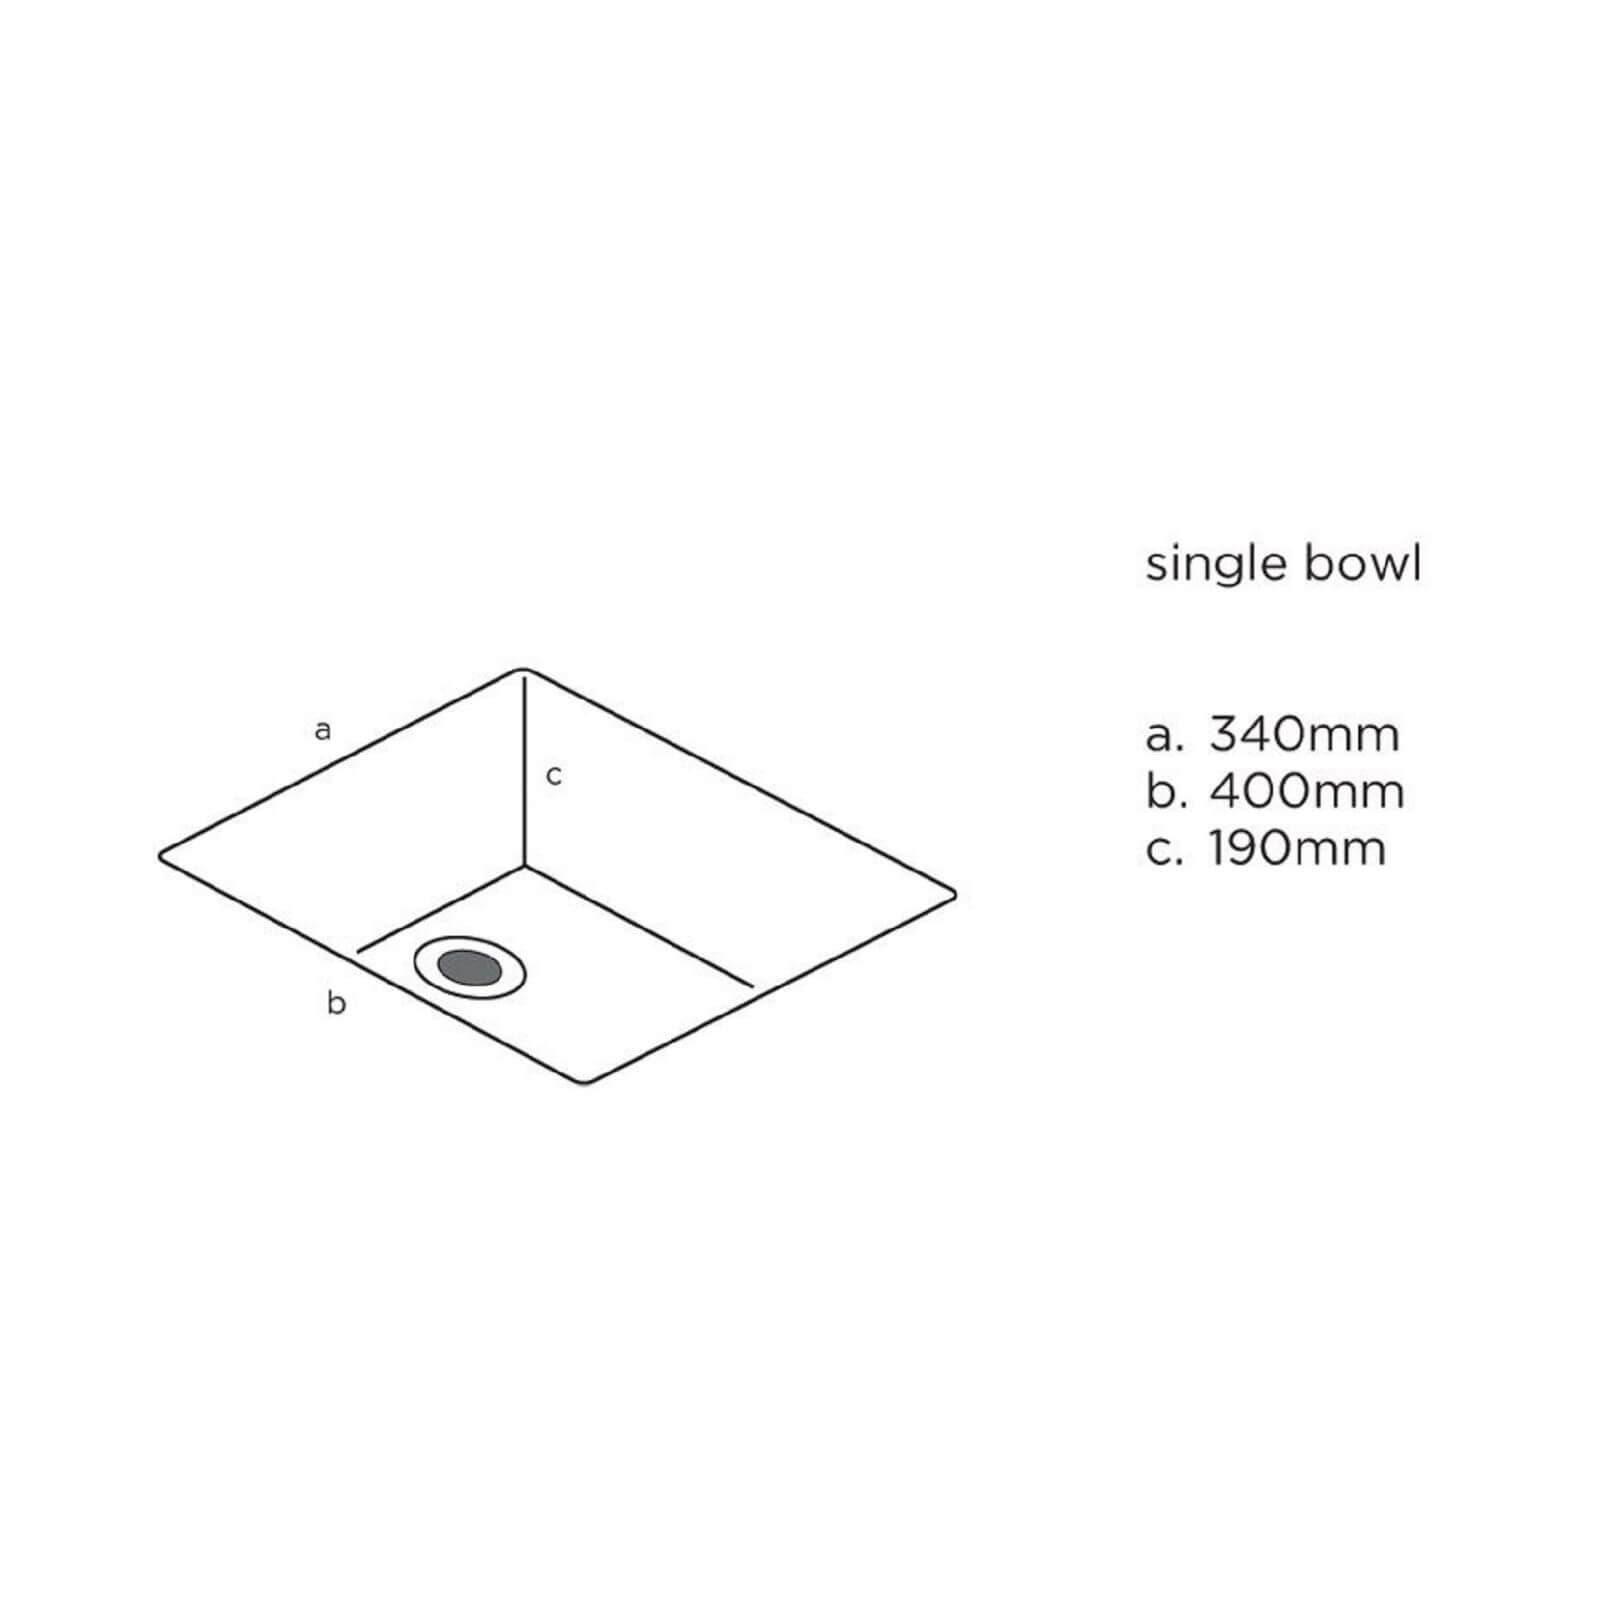 Maia Brazilian Greige Kitchen Sink Worktop - Universal Bowl - 3600 x 600 x 42mm